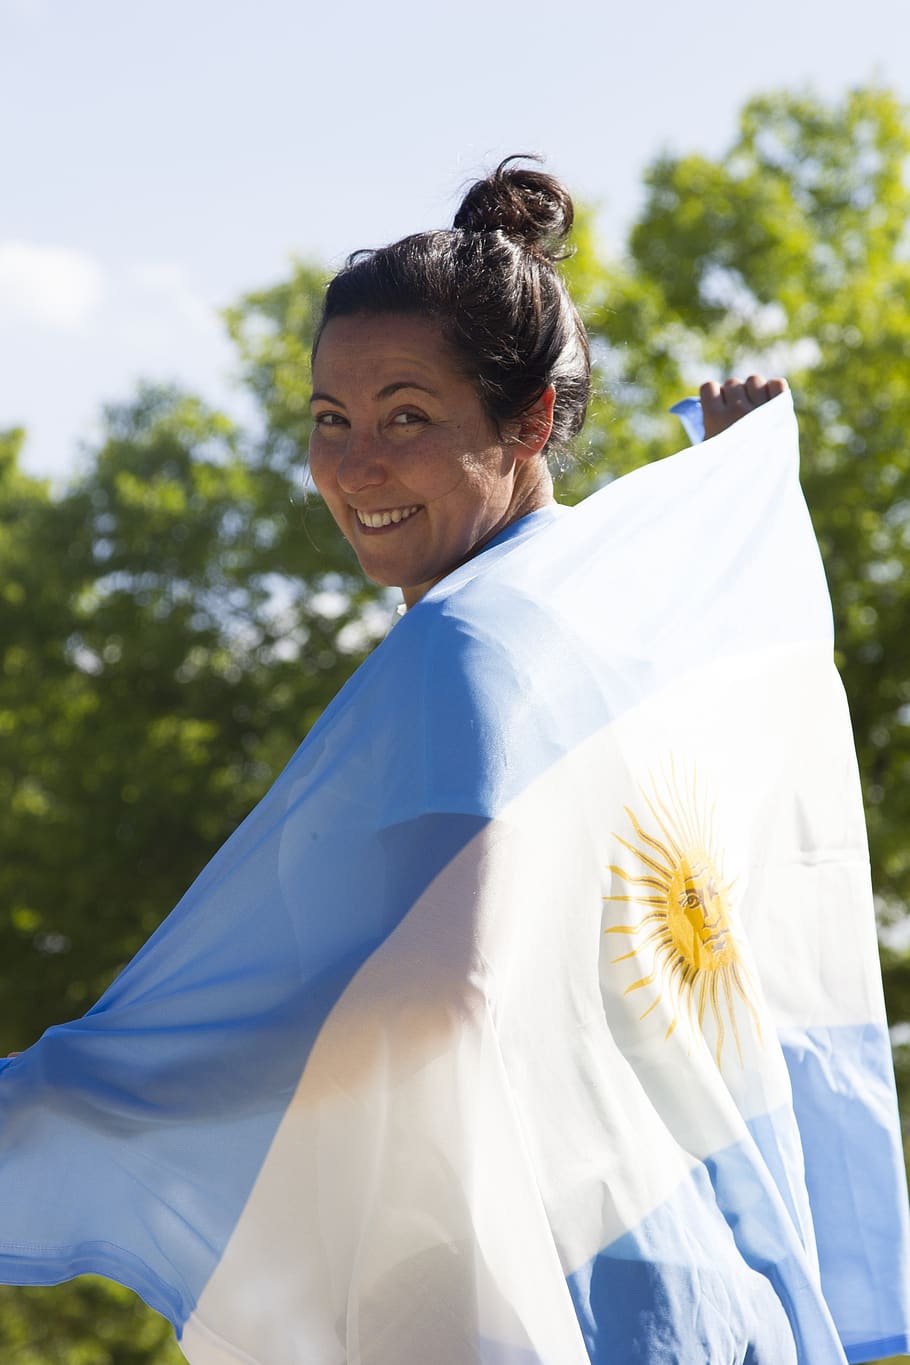 pride, argentina flag, flag, celeste, national, sun, nation, country, flaming, white